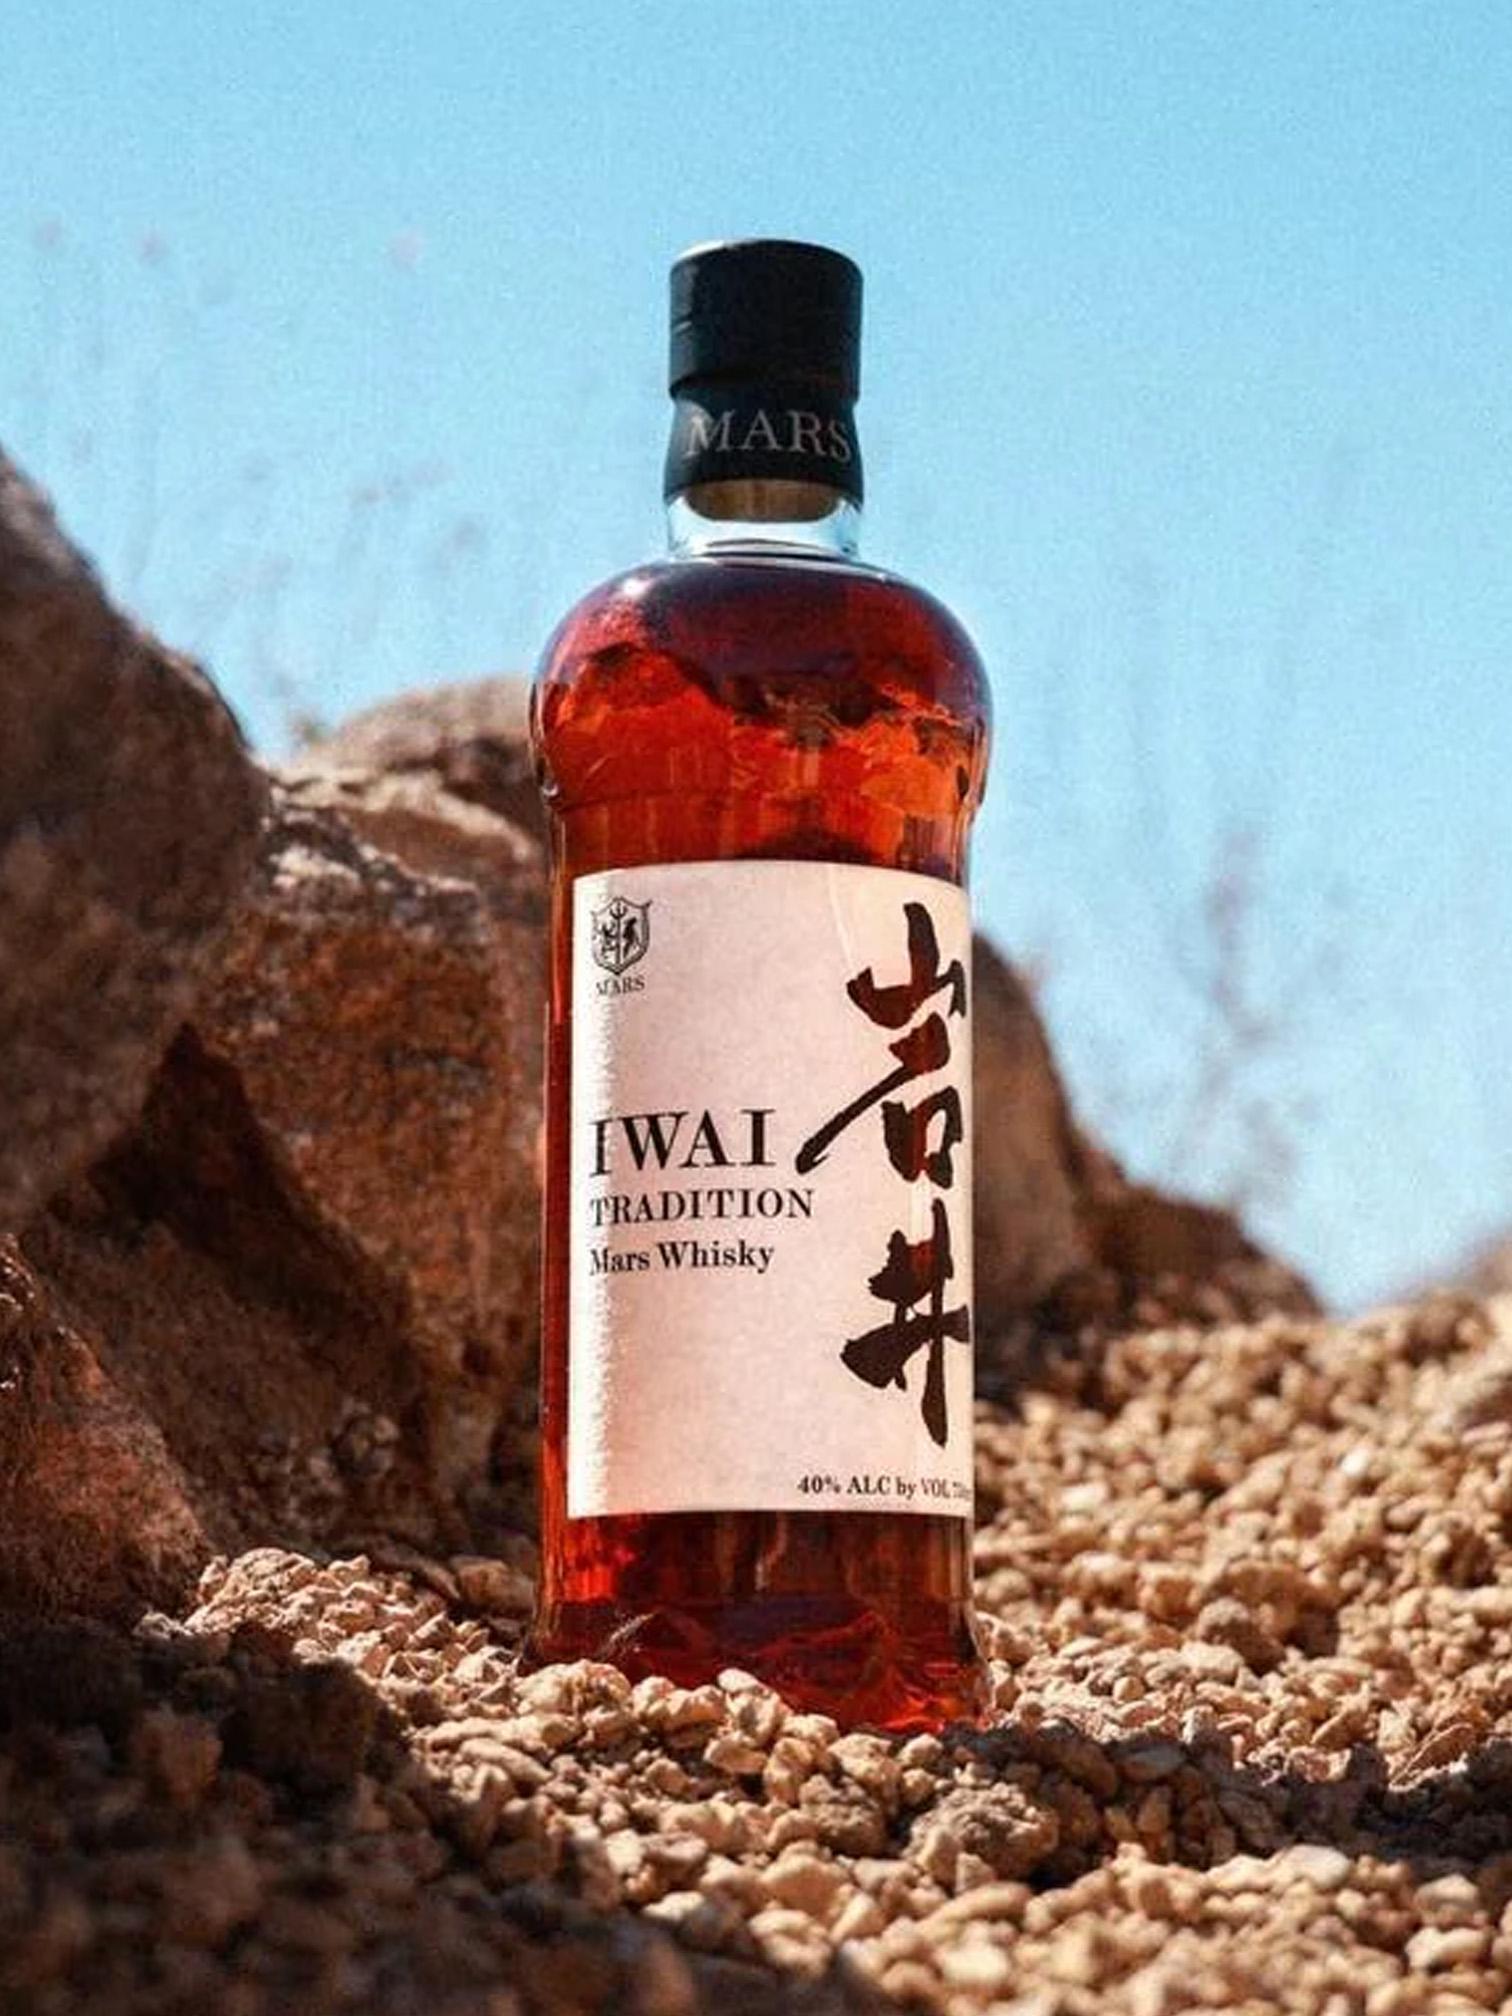 Akashi Single Malt Japanese Whisky Red Wine Cask Finish Cask